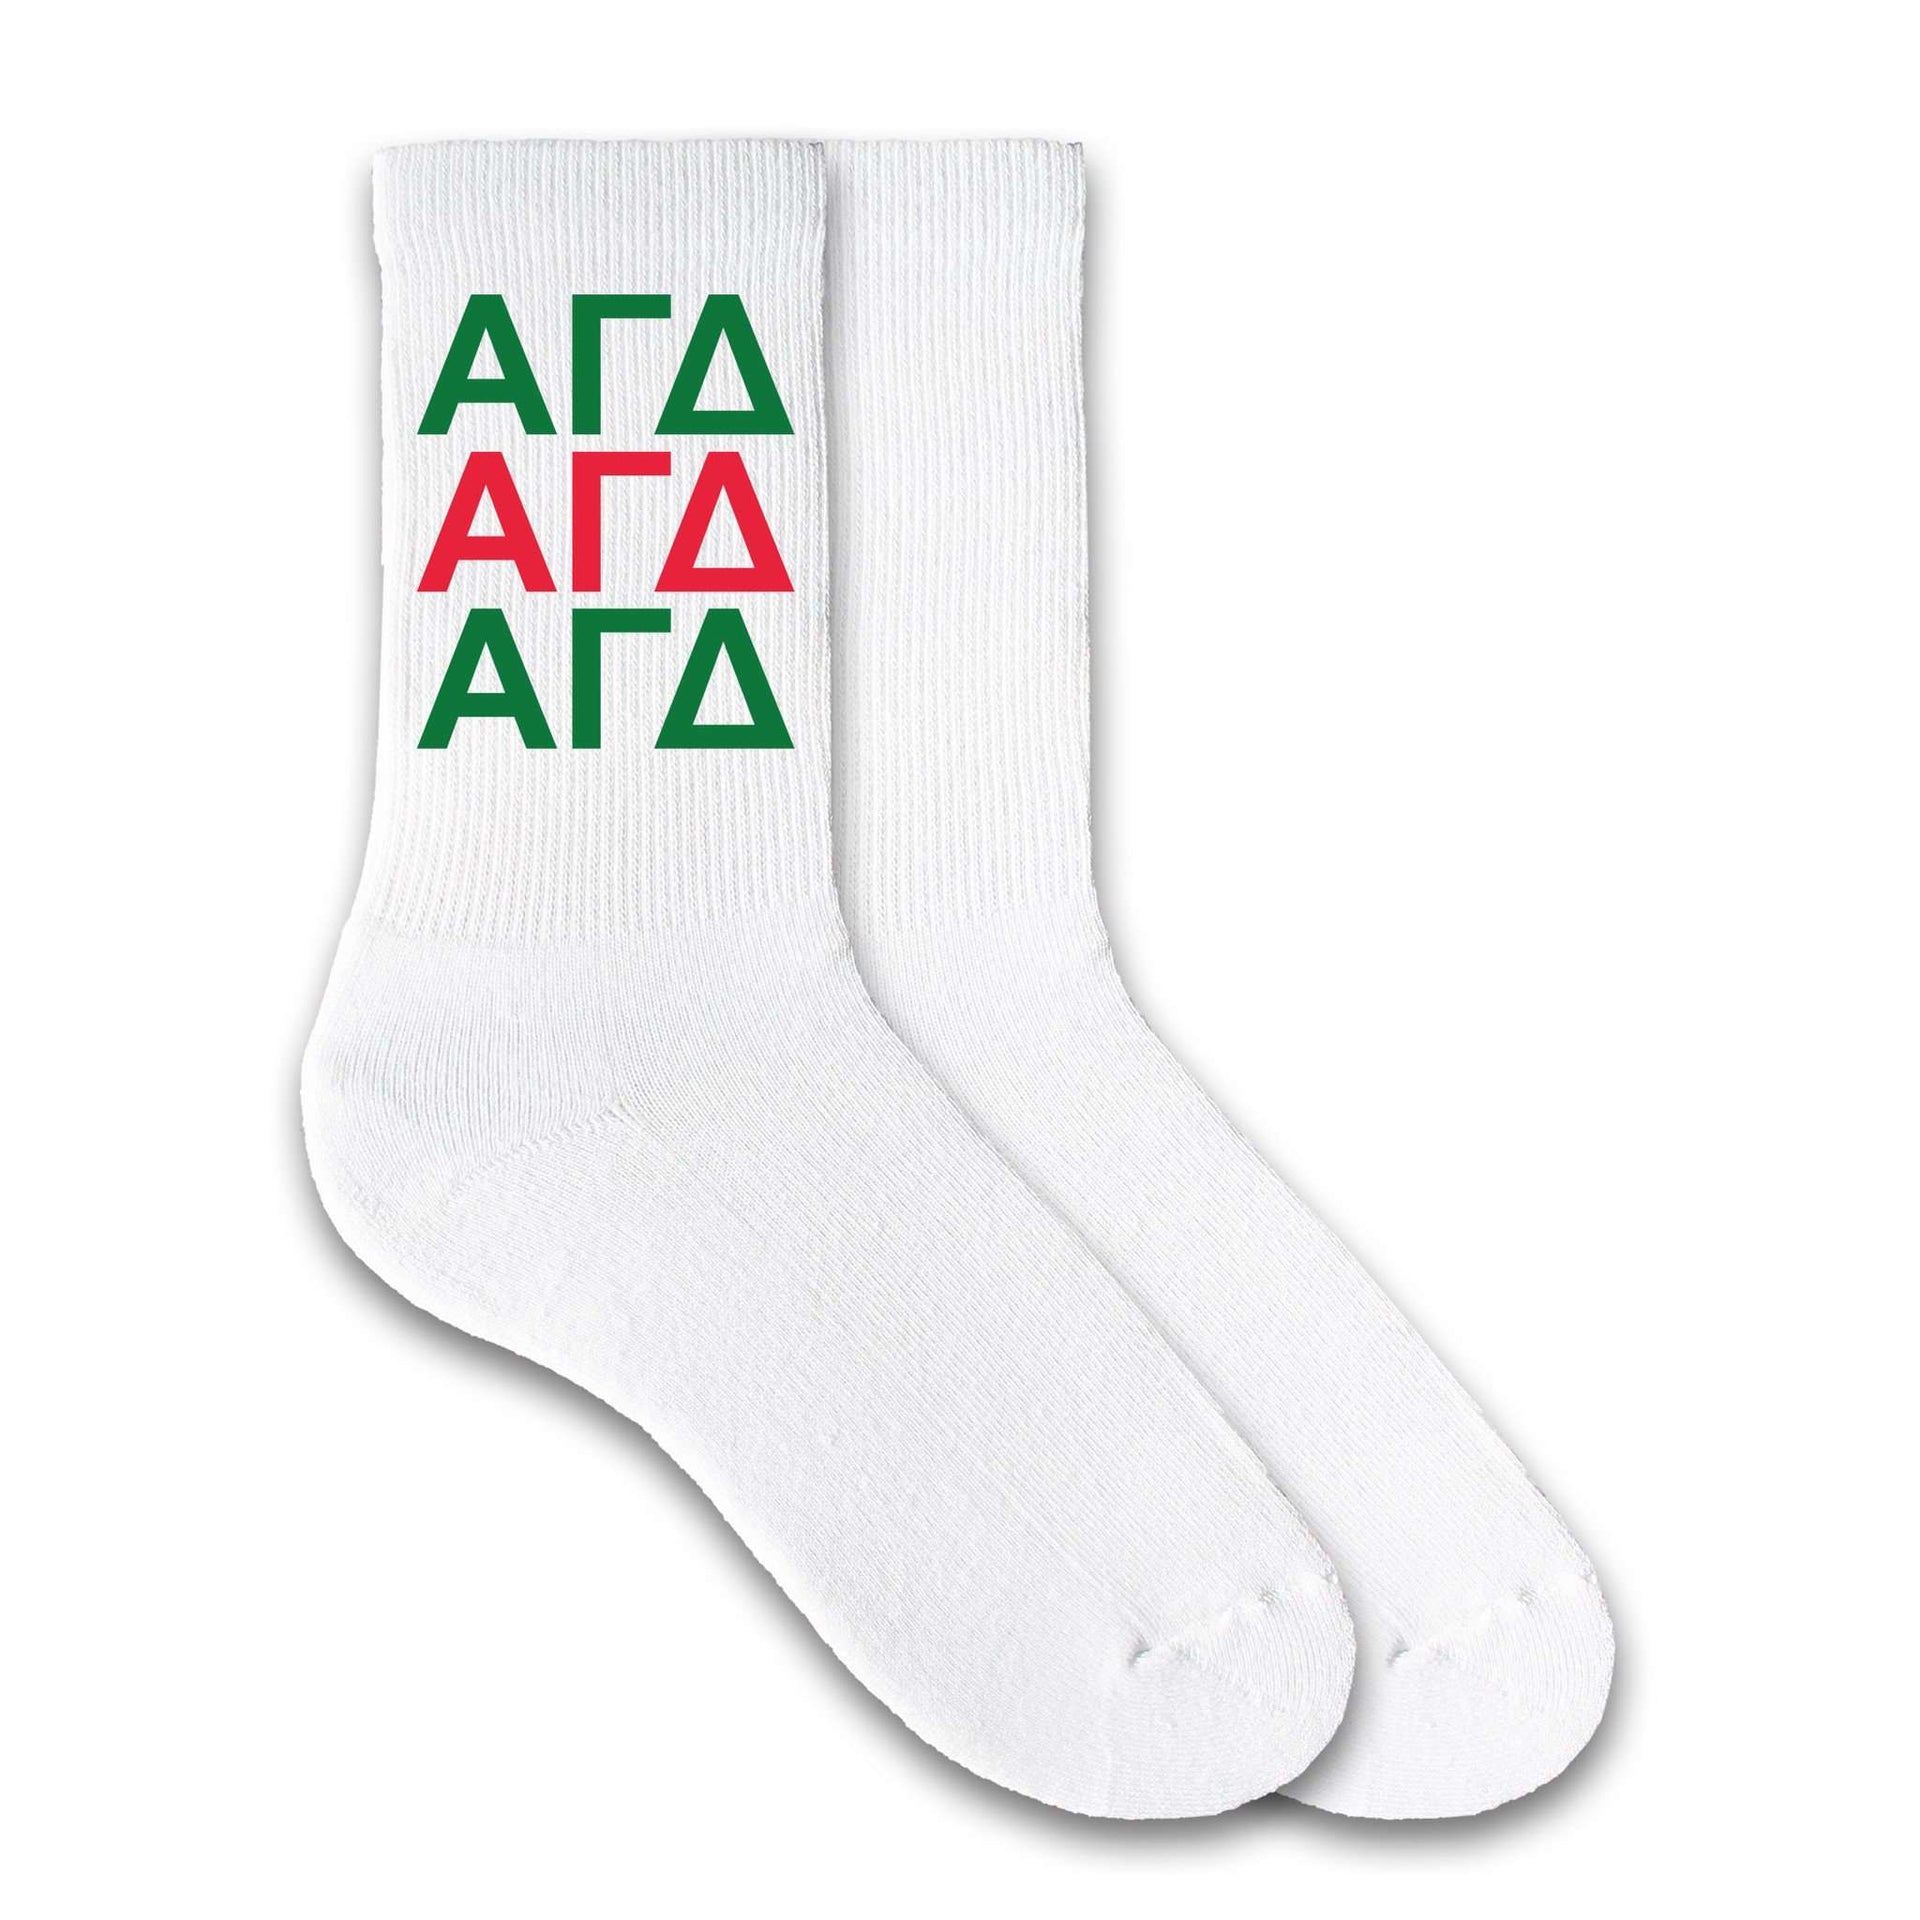 Alpha Gamma Delta sorority letters in repeat pattern digitally printed on crew socks.